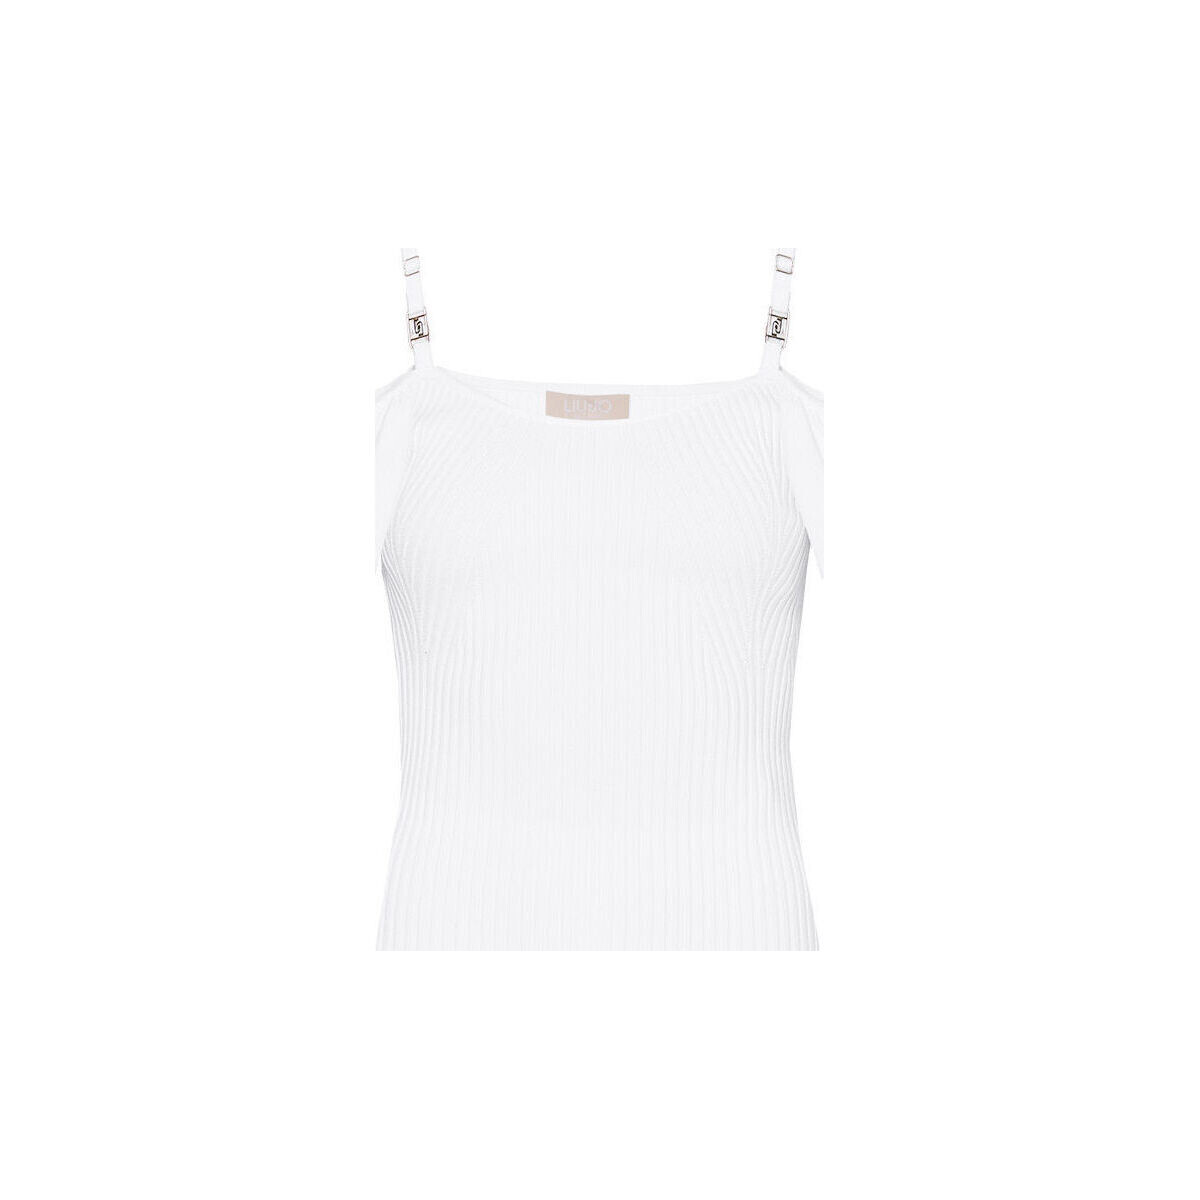 textil Mujer Tops / Blusas Liu Jo Top con tirantes Blanco